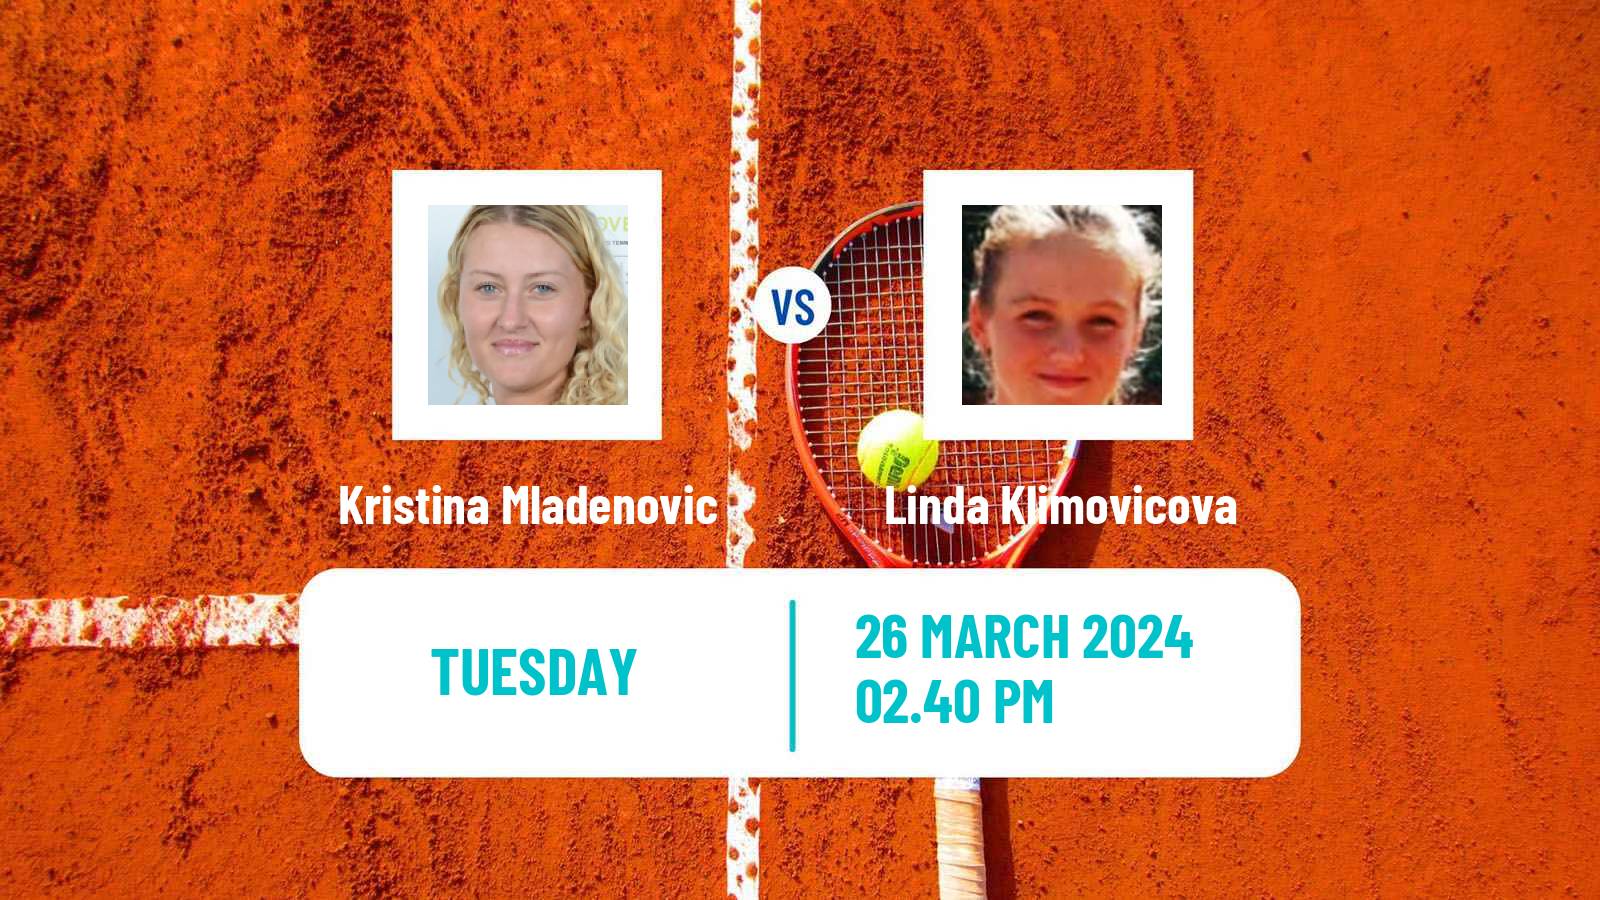 Tennis ITF W75 Croissy Beaubourg Women Kristina Mladenovic - Linda Klimovicova